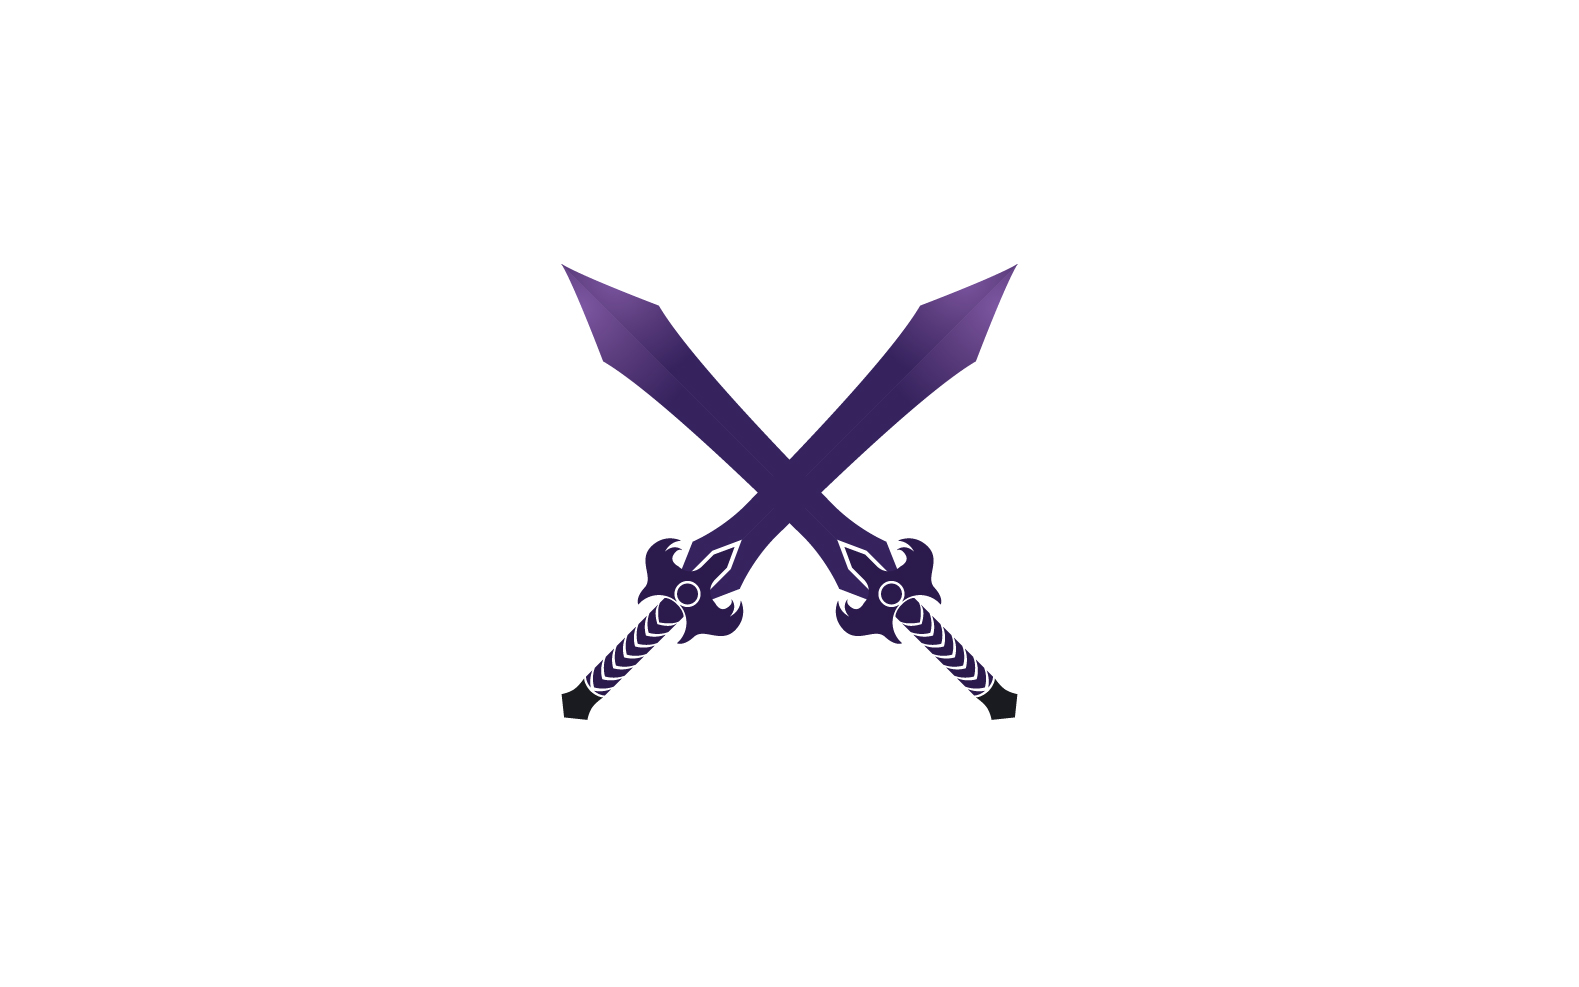 Sword item collection in game vector design v18